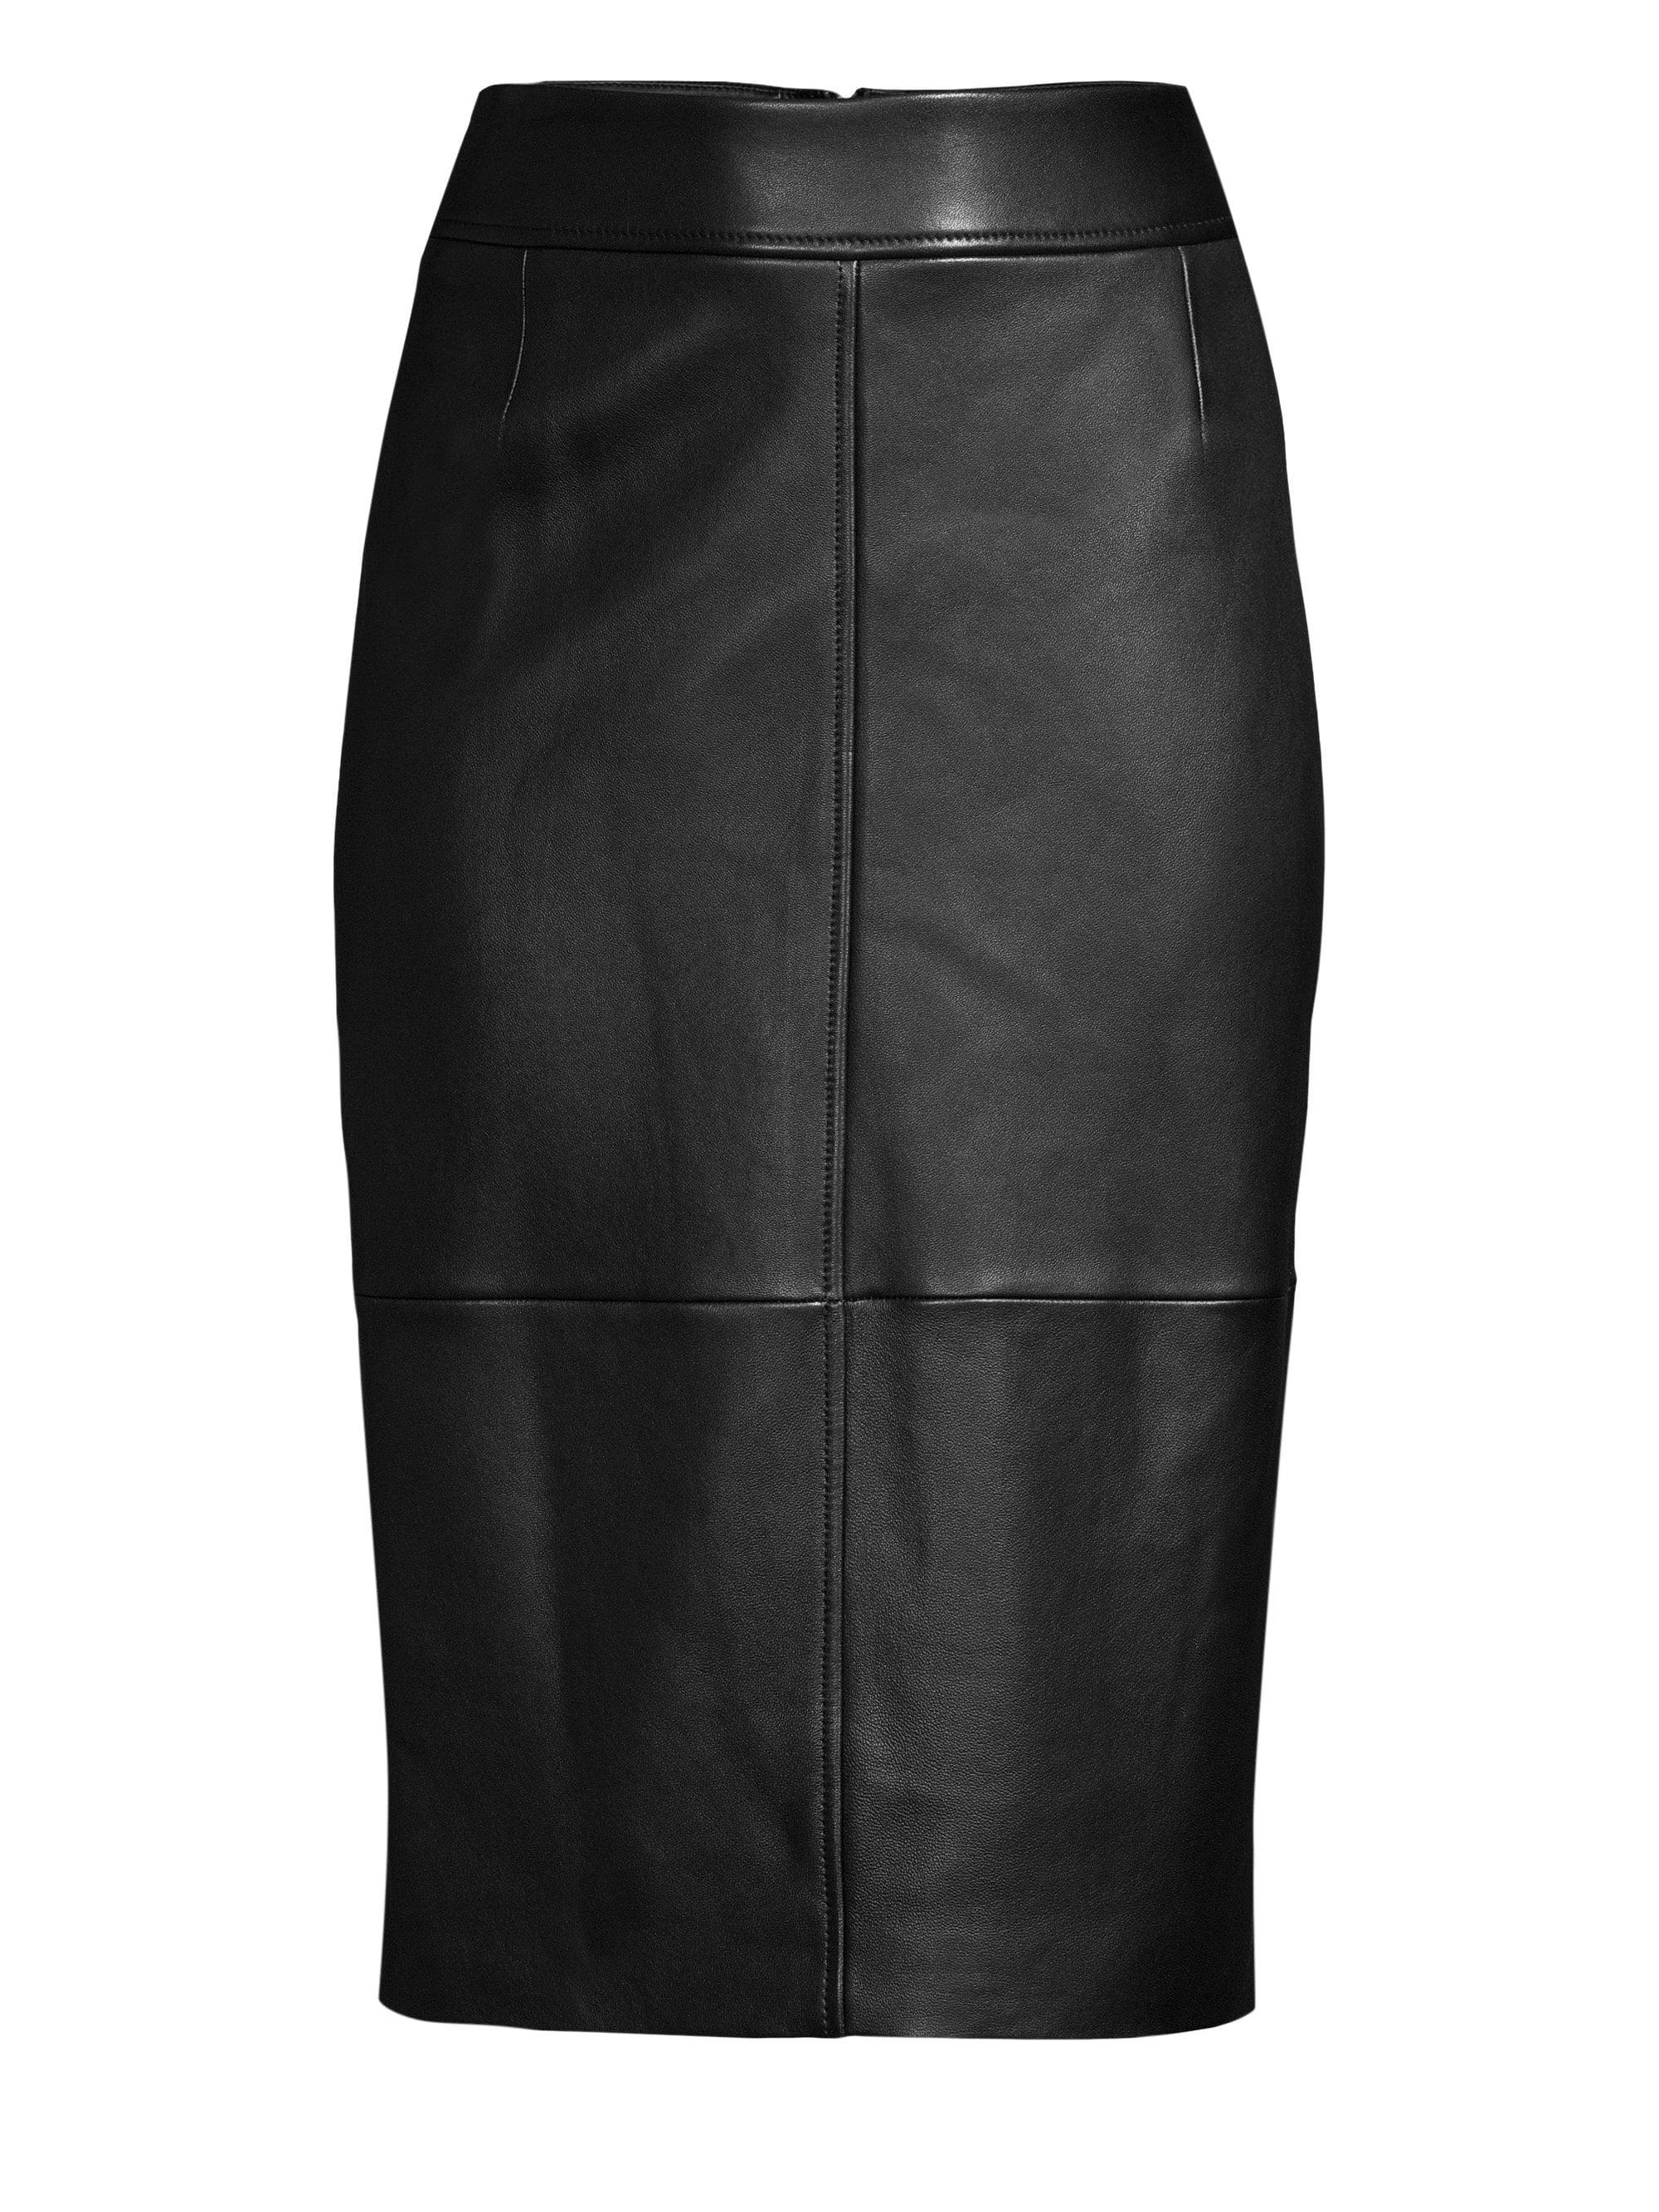 BOSS by HUGO BOSS Selrita Leather Pencil Skirt in Black | Lyst